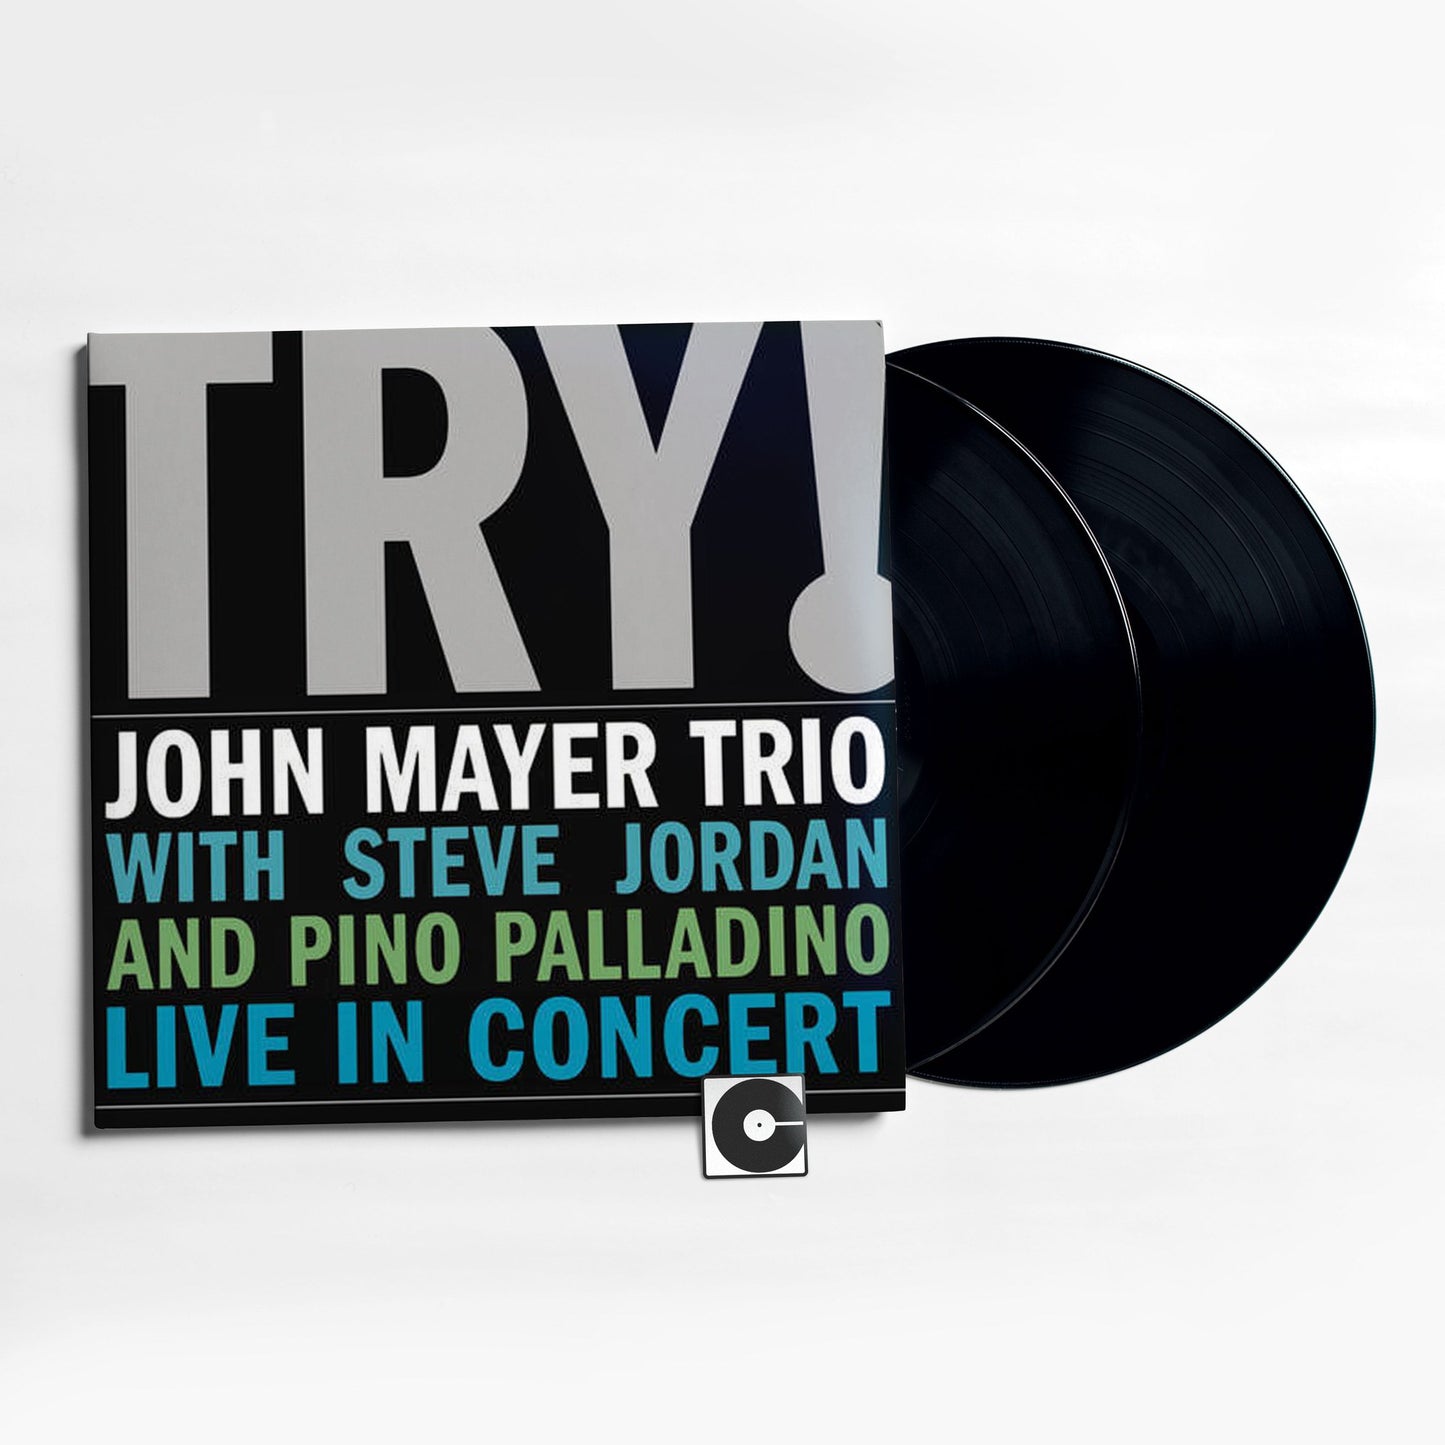 John Mayer Trio - "Try!"